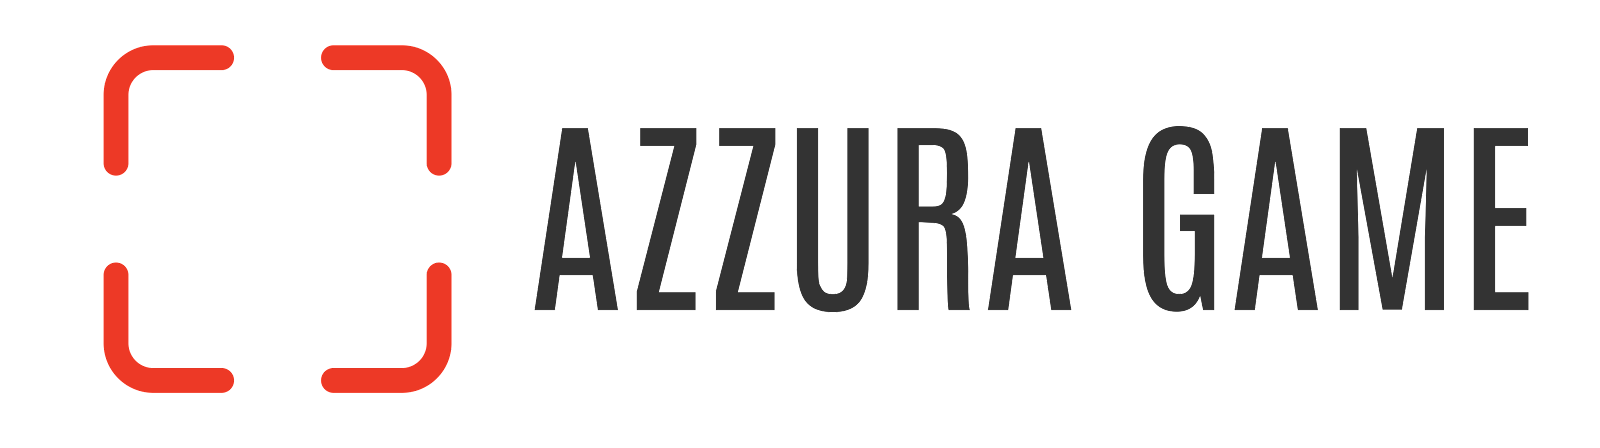 Azzura Movies Series Theme